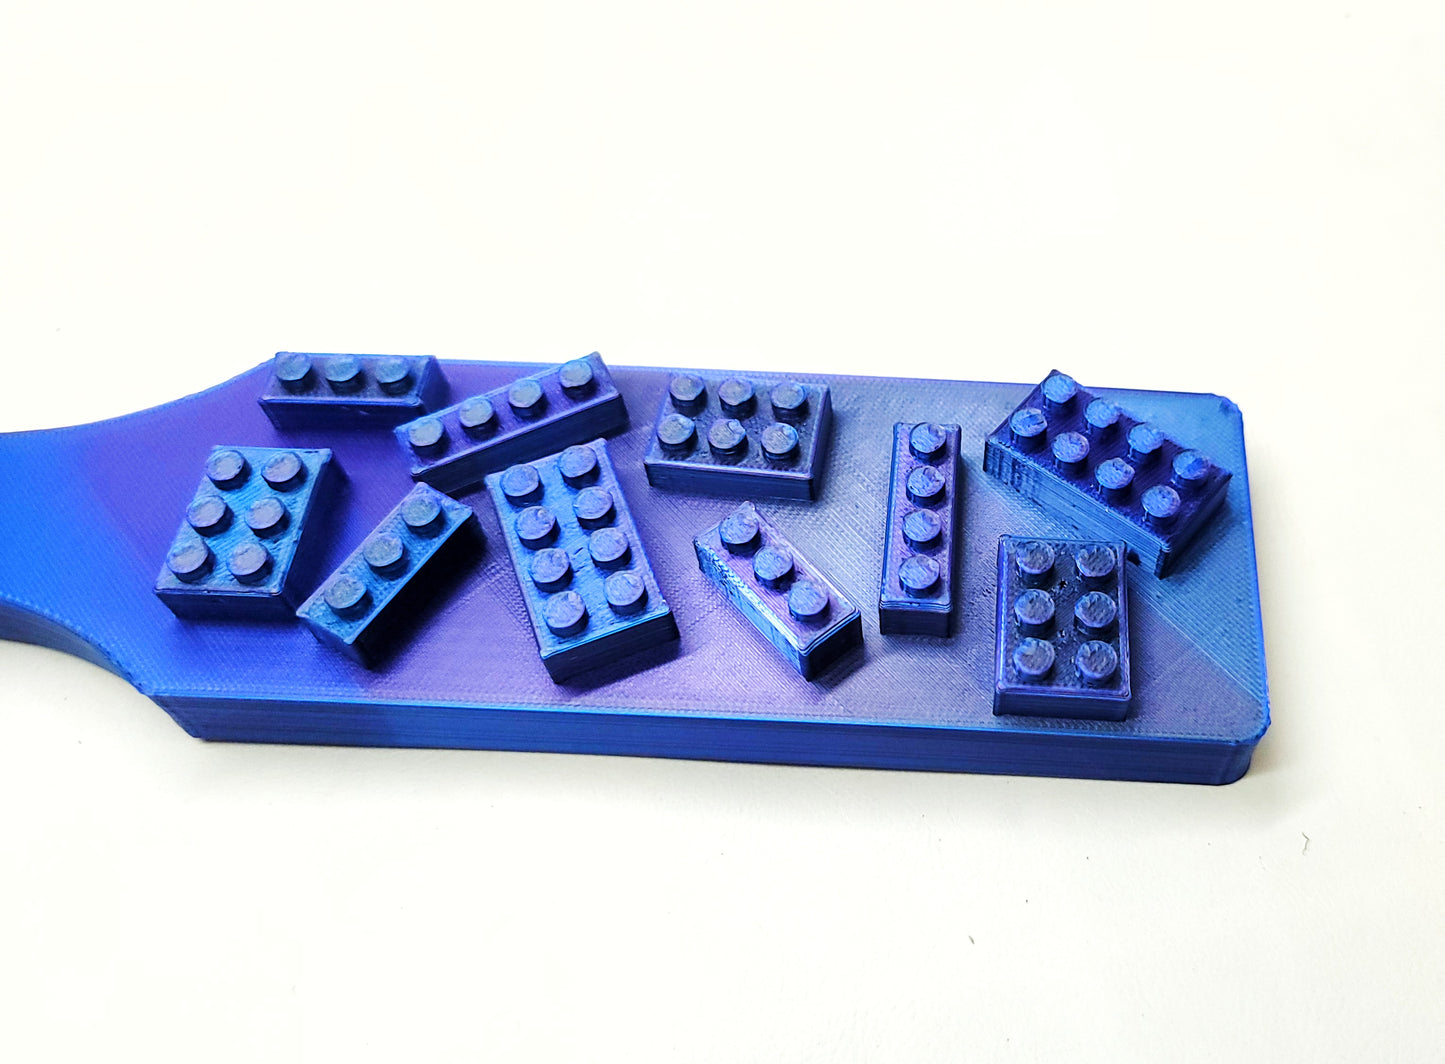 'Lego' Paddle in Blue, Purple, Black- In Stock